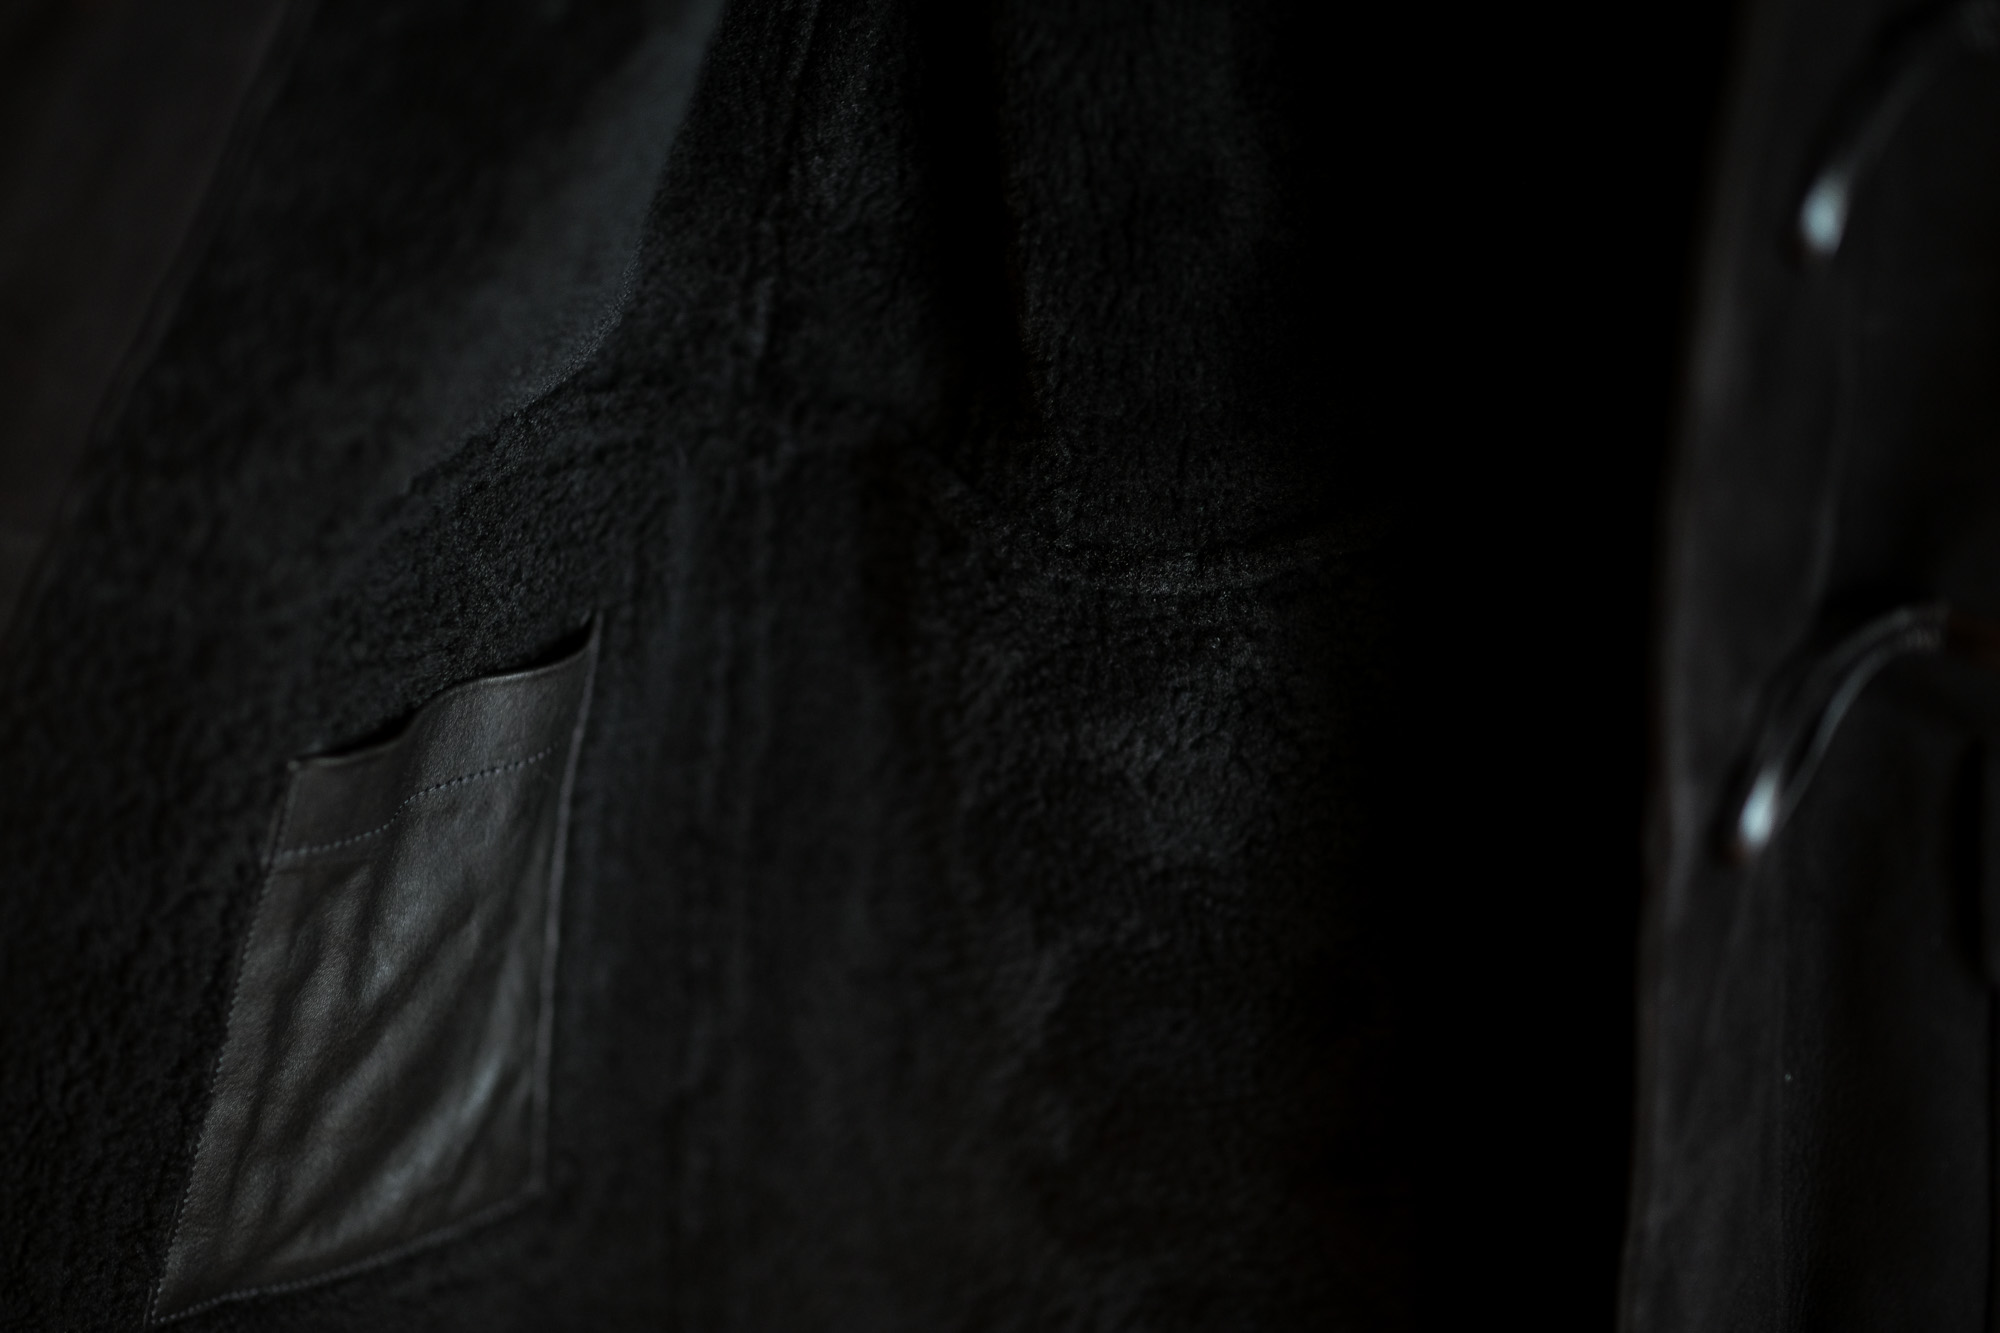 SILENCE(サイレンス) Mouton Duffle Coat D.F.MERINO SPAGNOLO (ミディアムヘアームートン) ムートン ダッフルコート NERO (ブラック) Made in italy (イタリア製) 2020 秋冬 愛知 名古屋 Alto e Diritto アルトエデリット